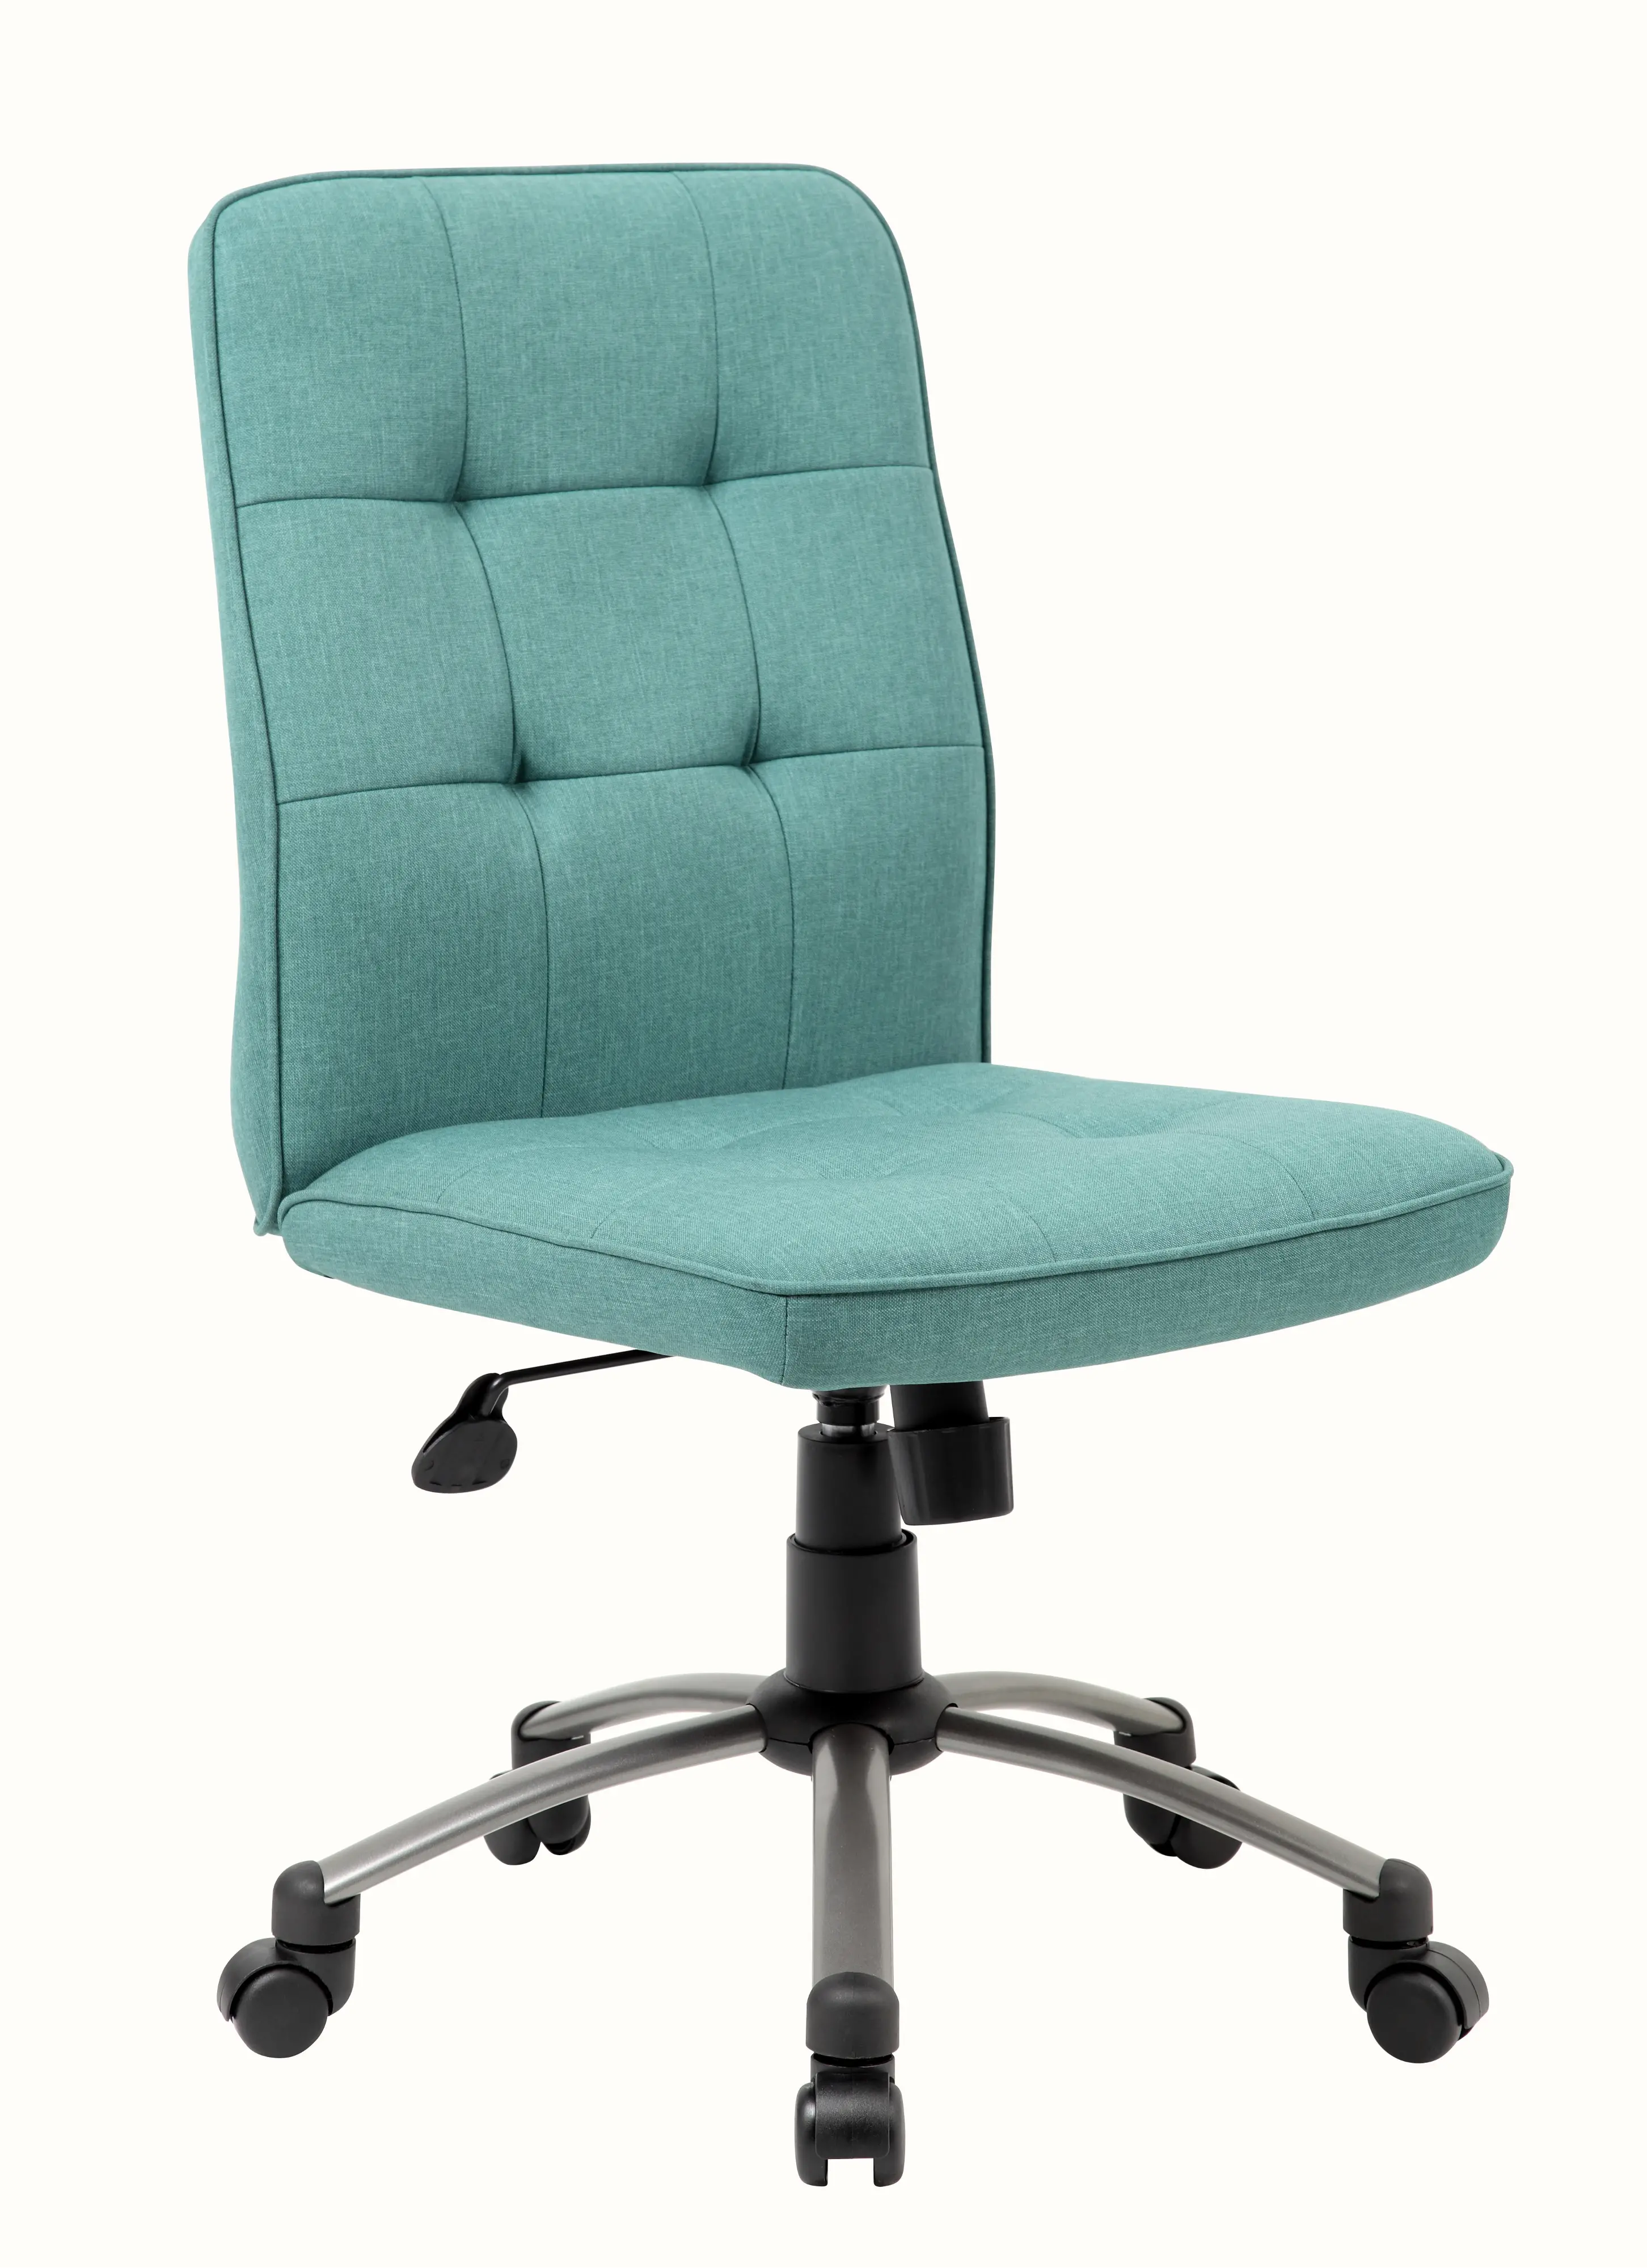 Green Ergonomic Office Chair